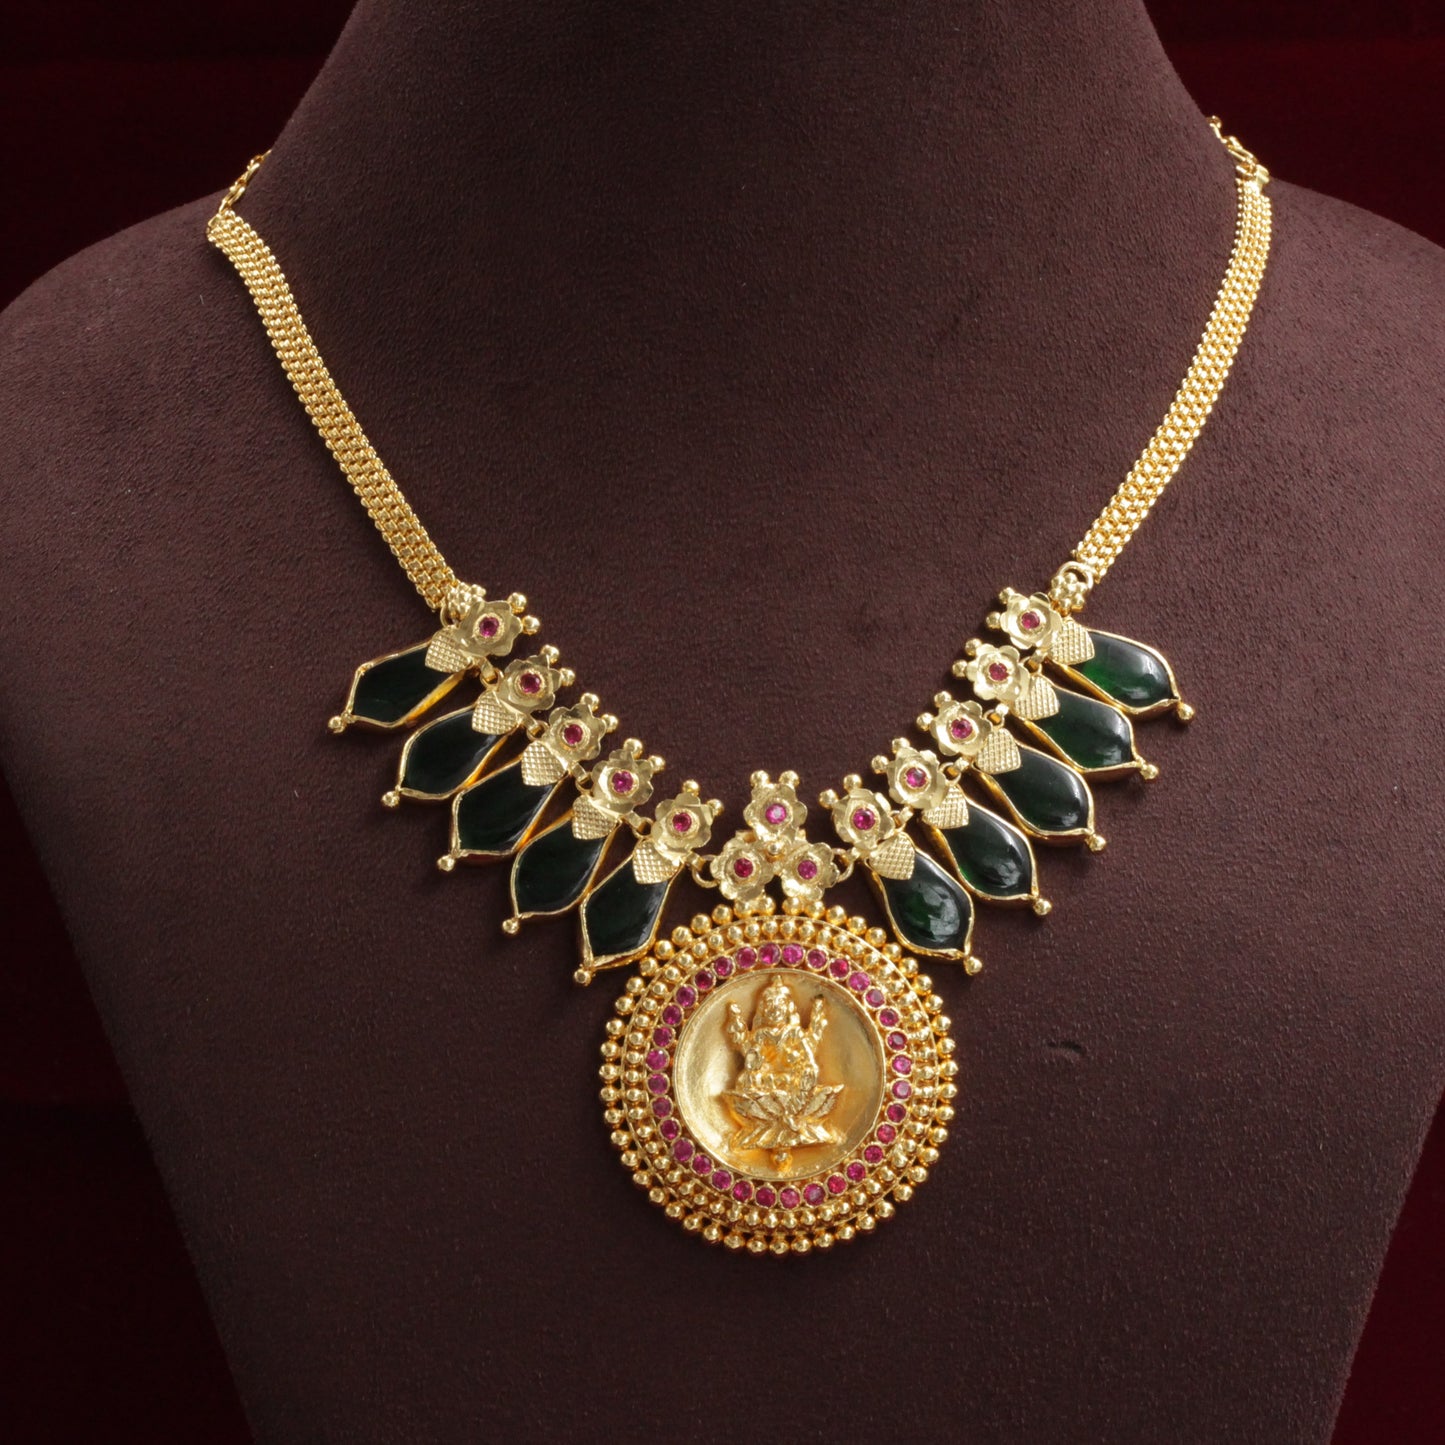 Real Gold Tone Traditional Kerala Nagapadam AD Lakshmi Pendant Bridal Necklace